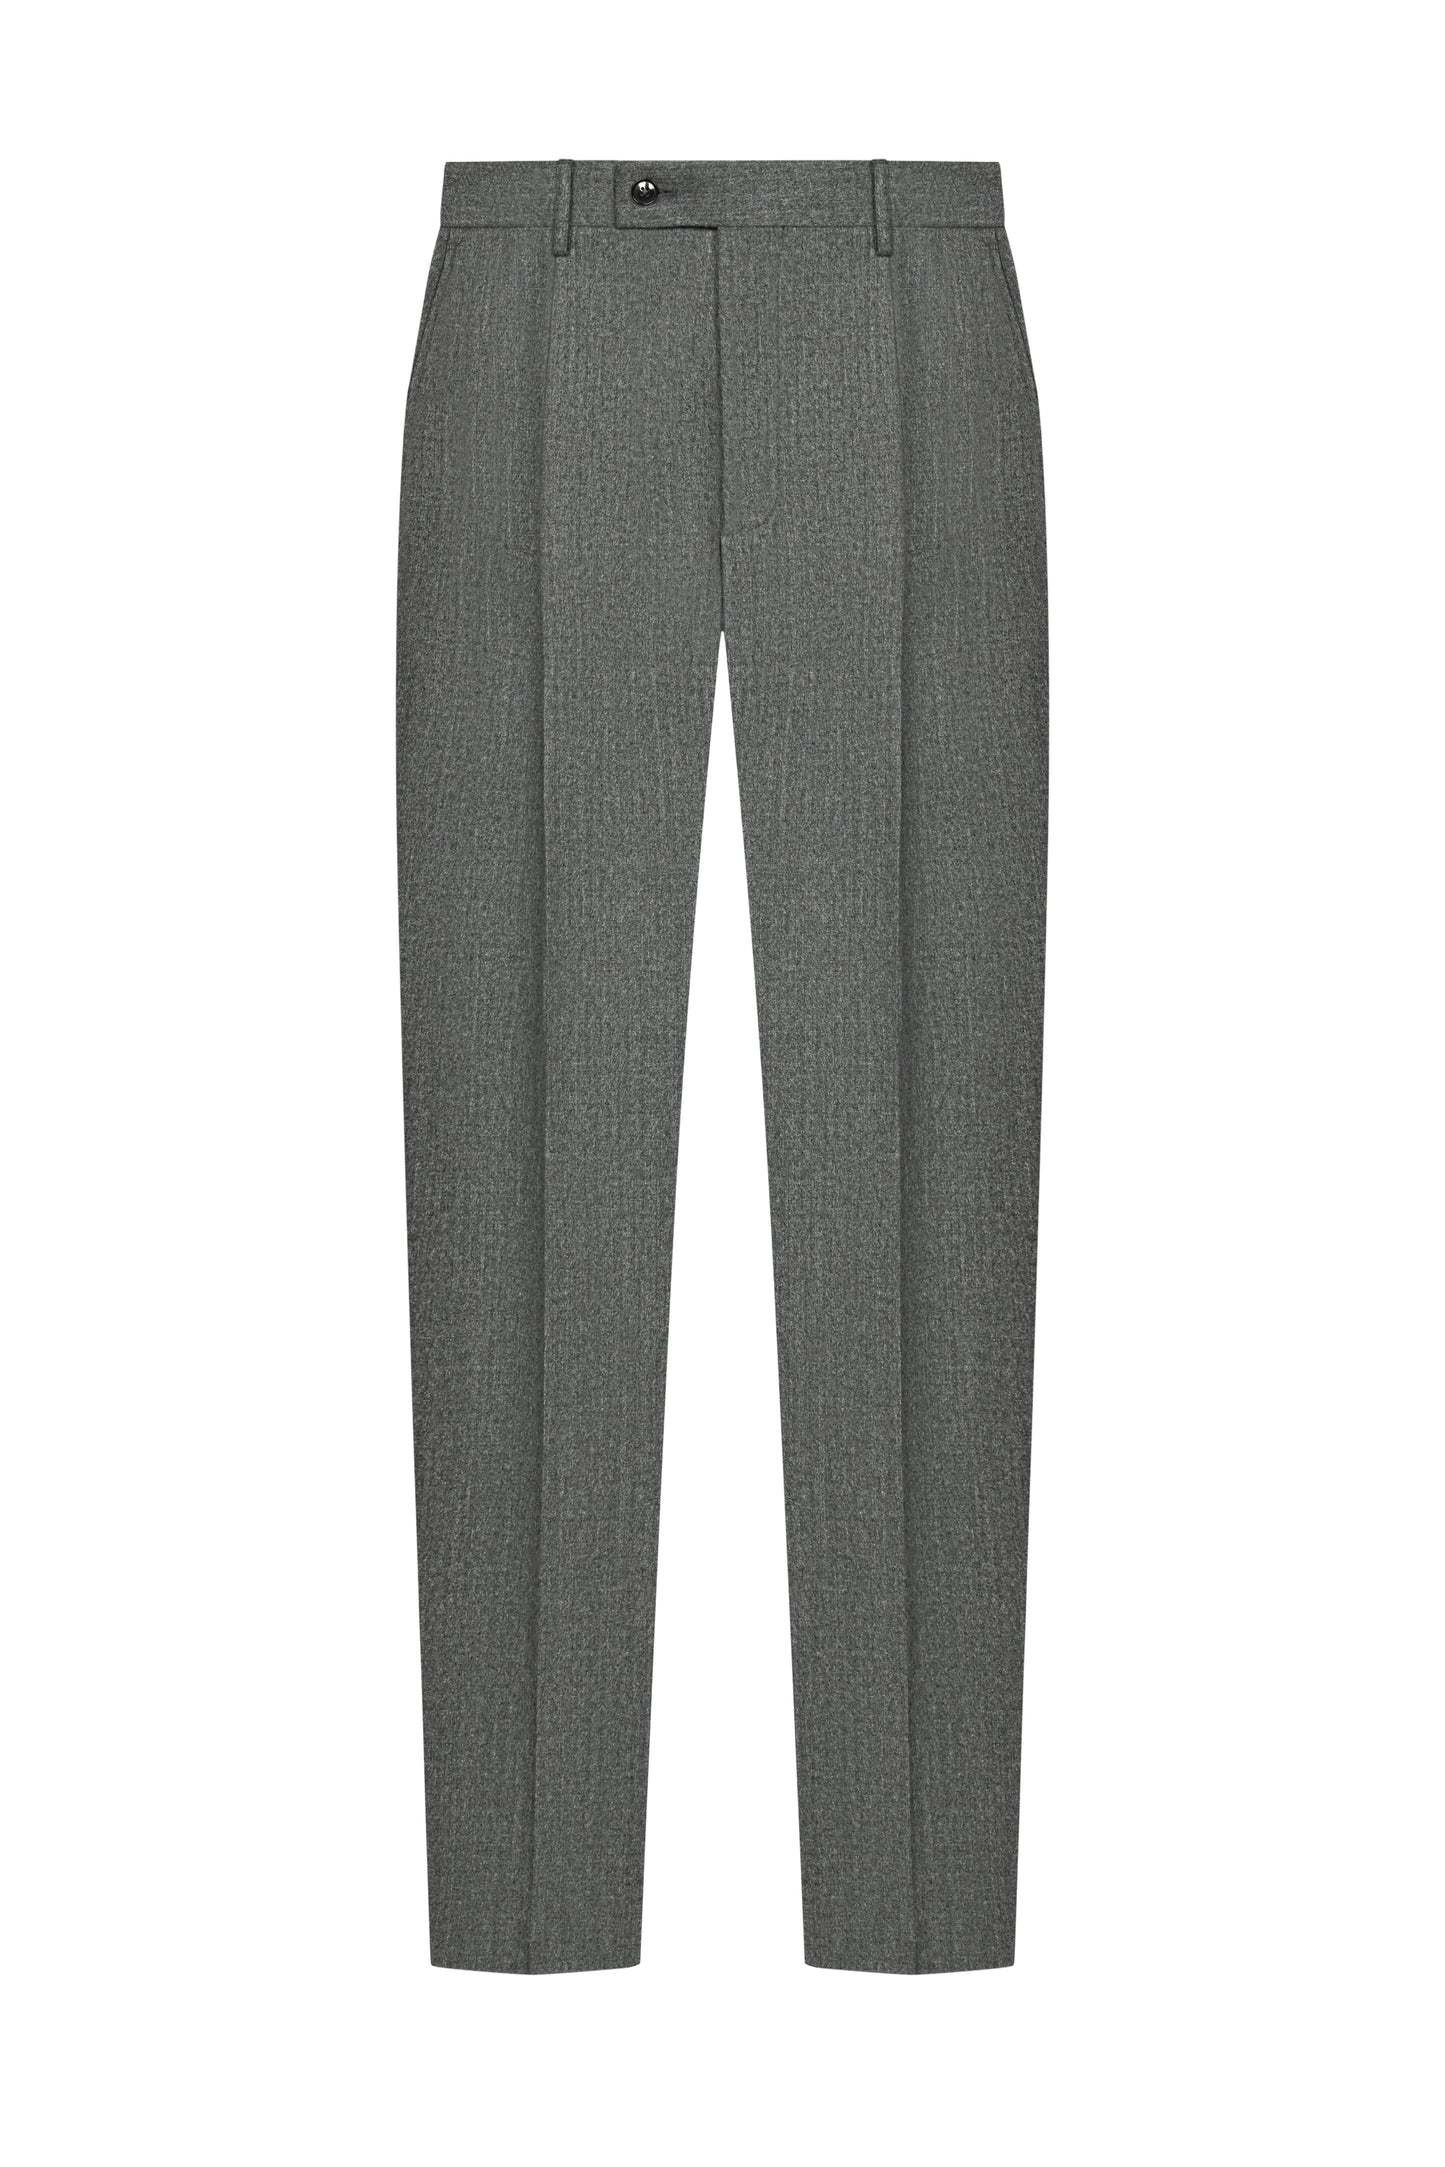 Steel Grey Flannel Suit